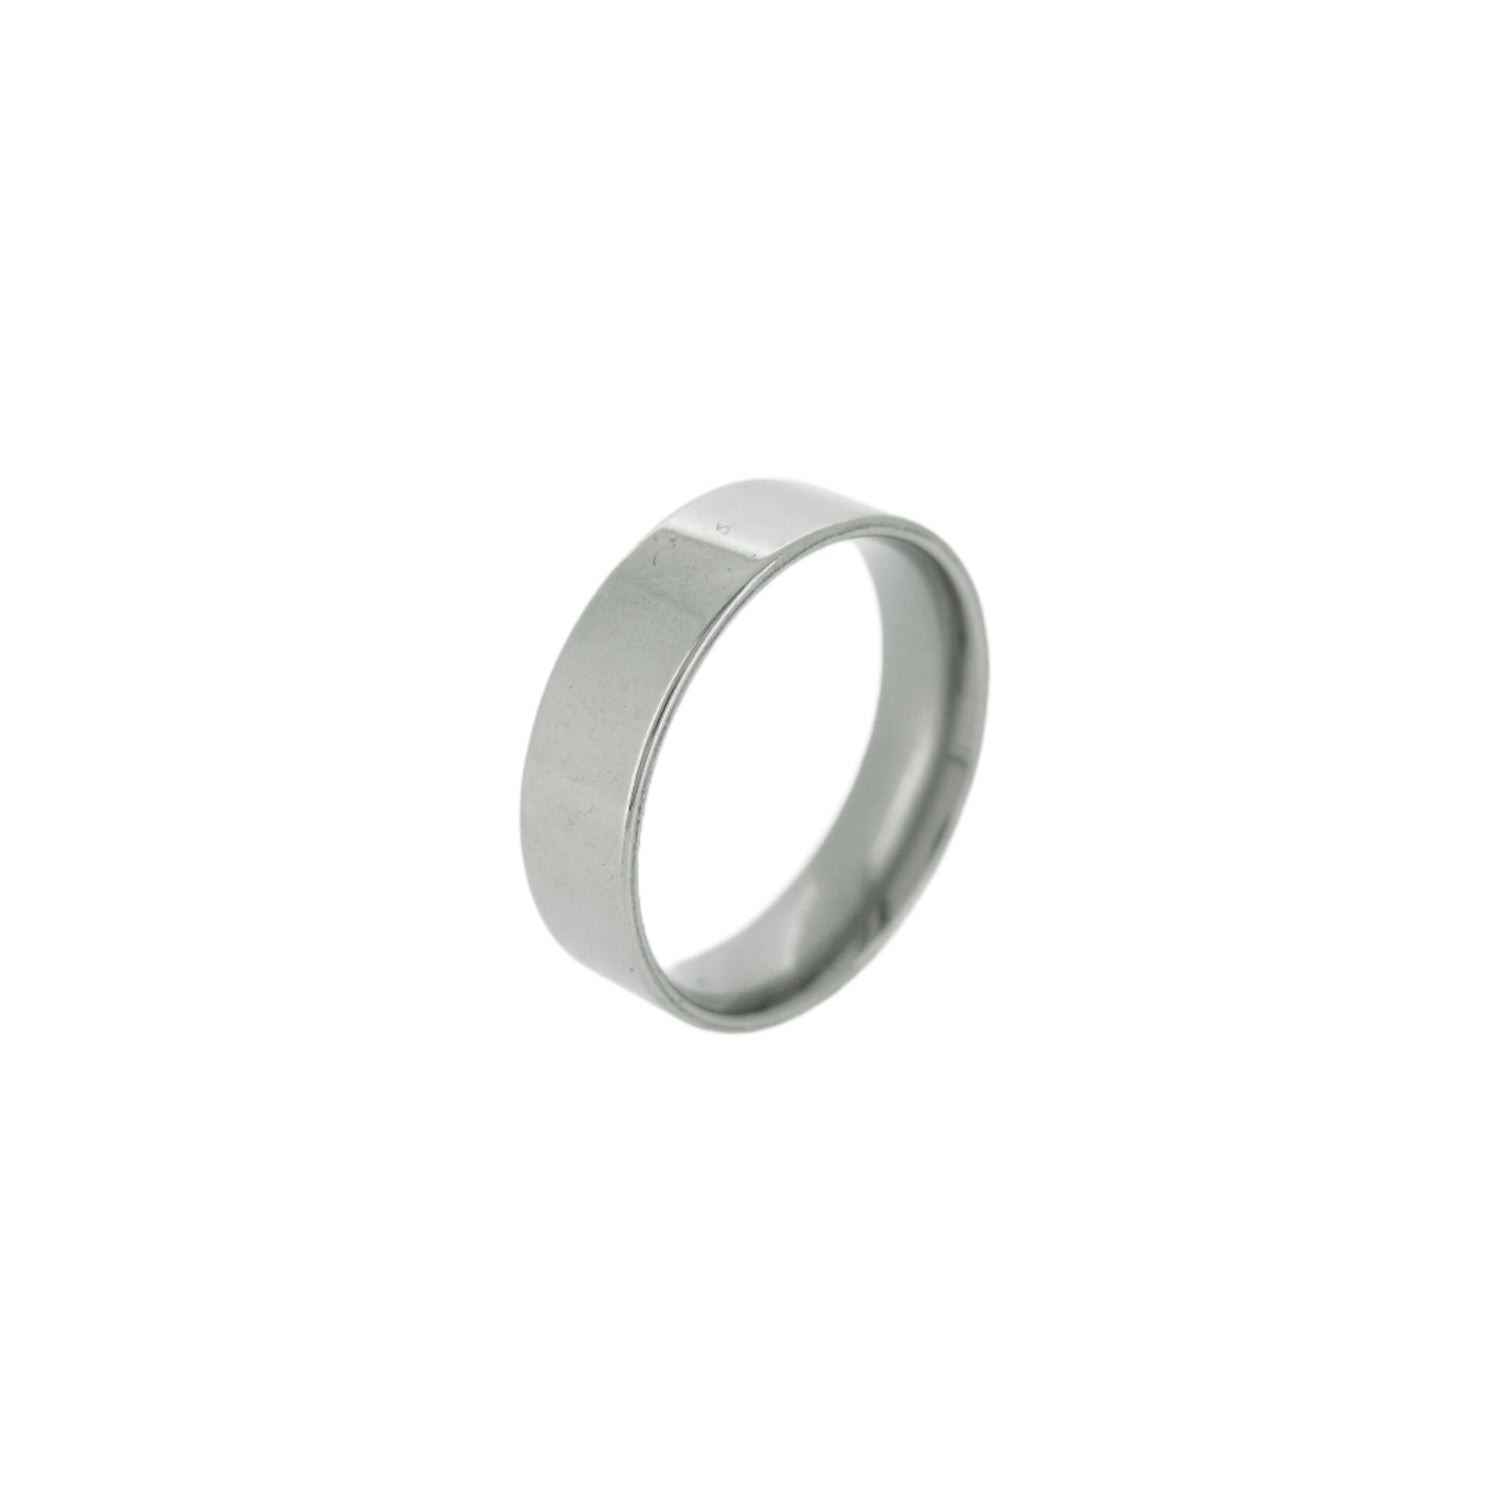 Plain silver band ring for men